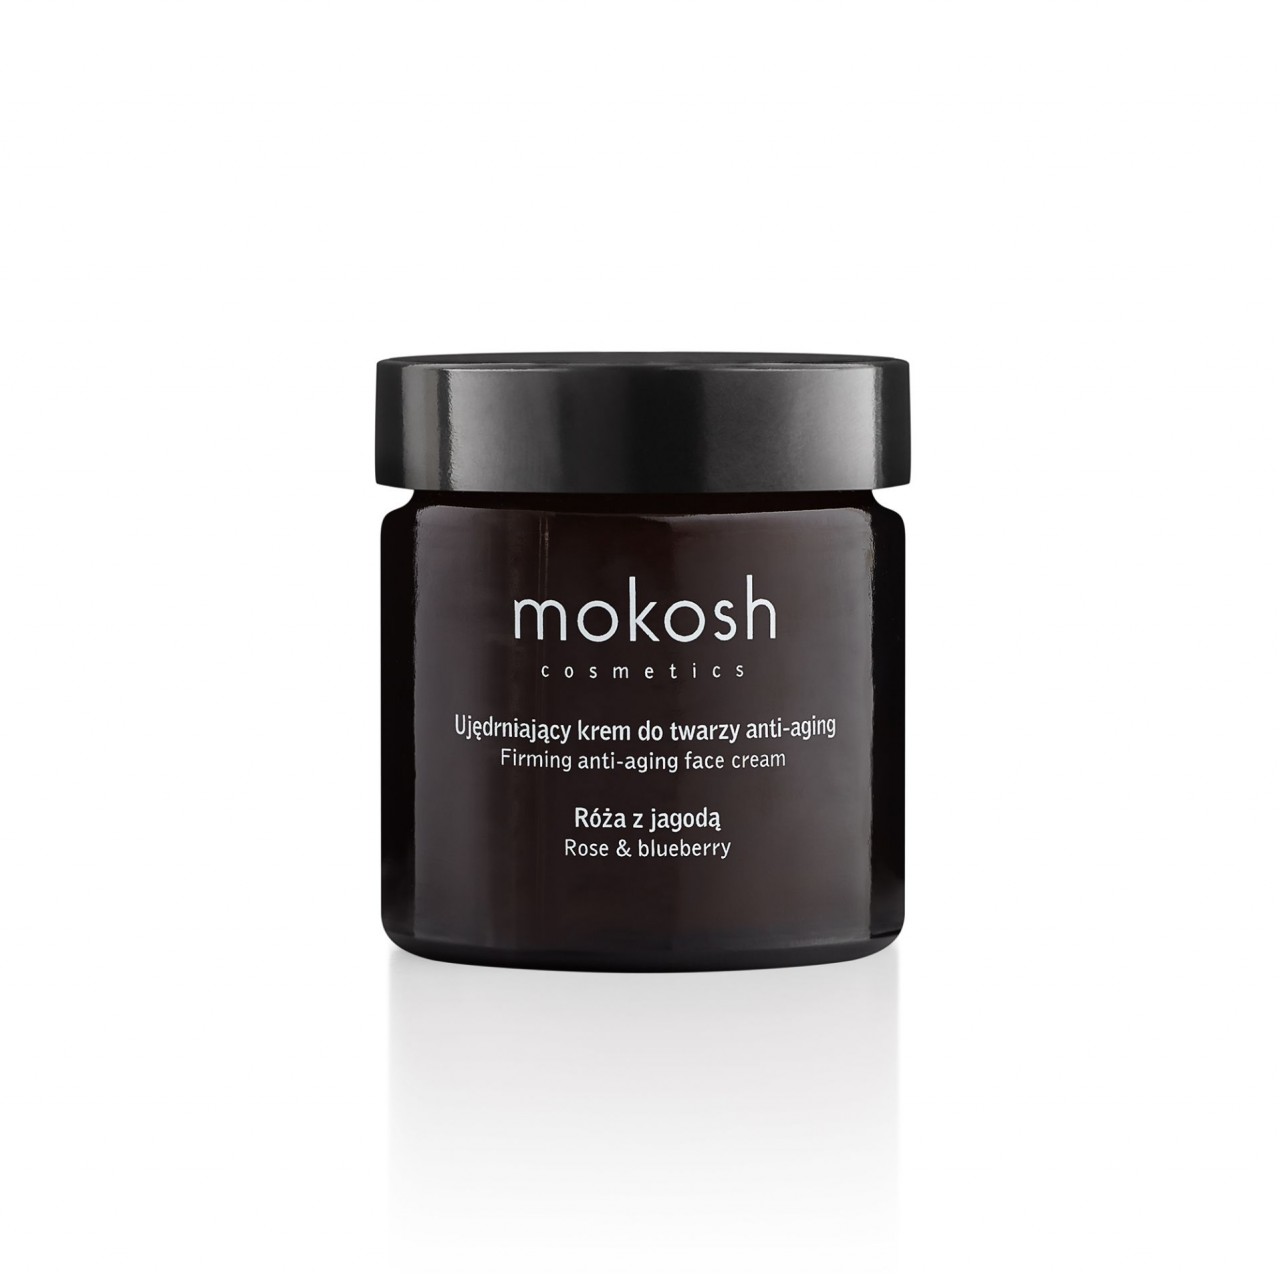 Mokosh Cosmetics Firming Anti-Aging Face Cream Rose & Blueberry